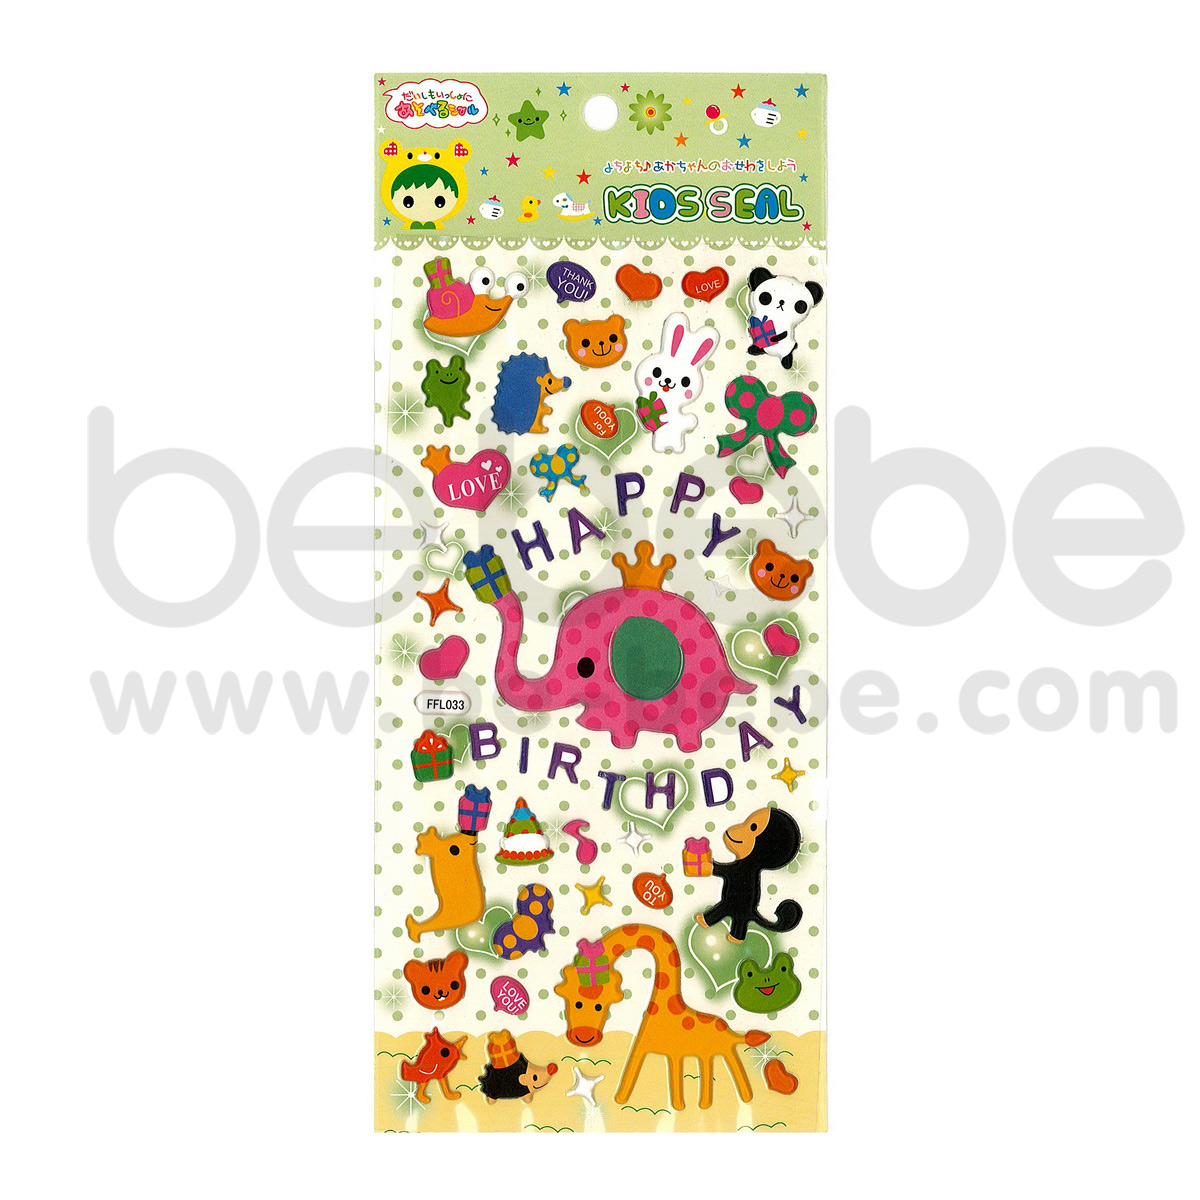 be bebe : Puffy Sticker (8.5x17cm.) / FFL-033